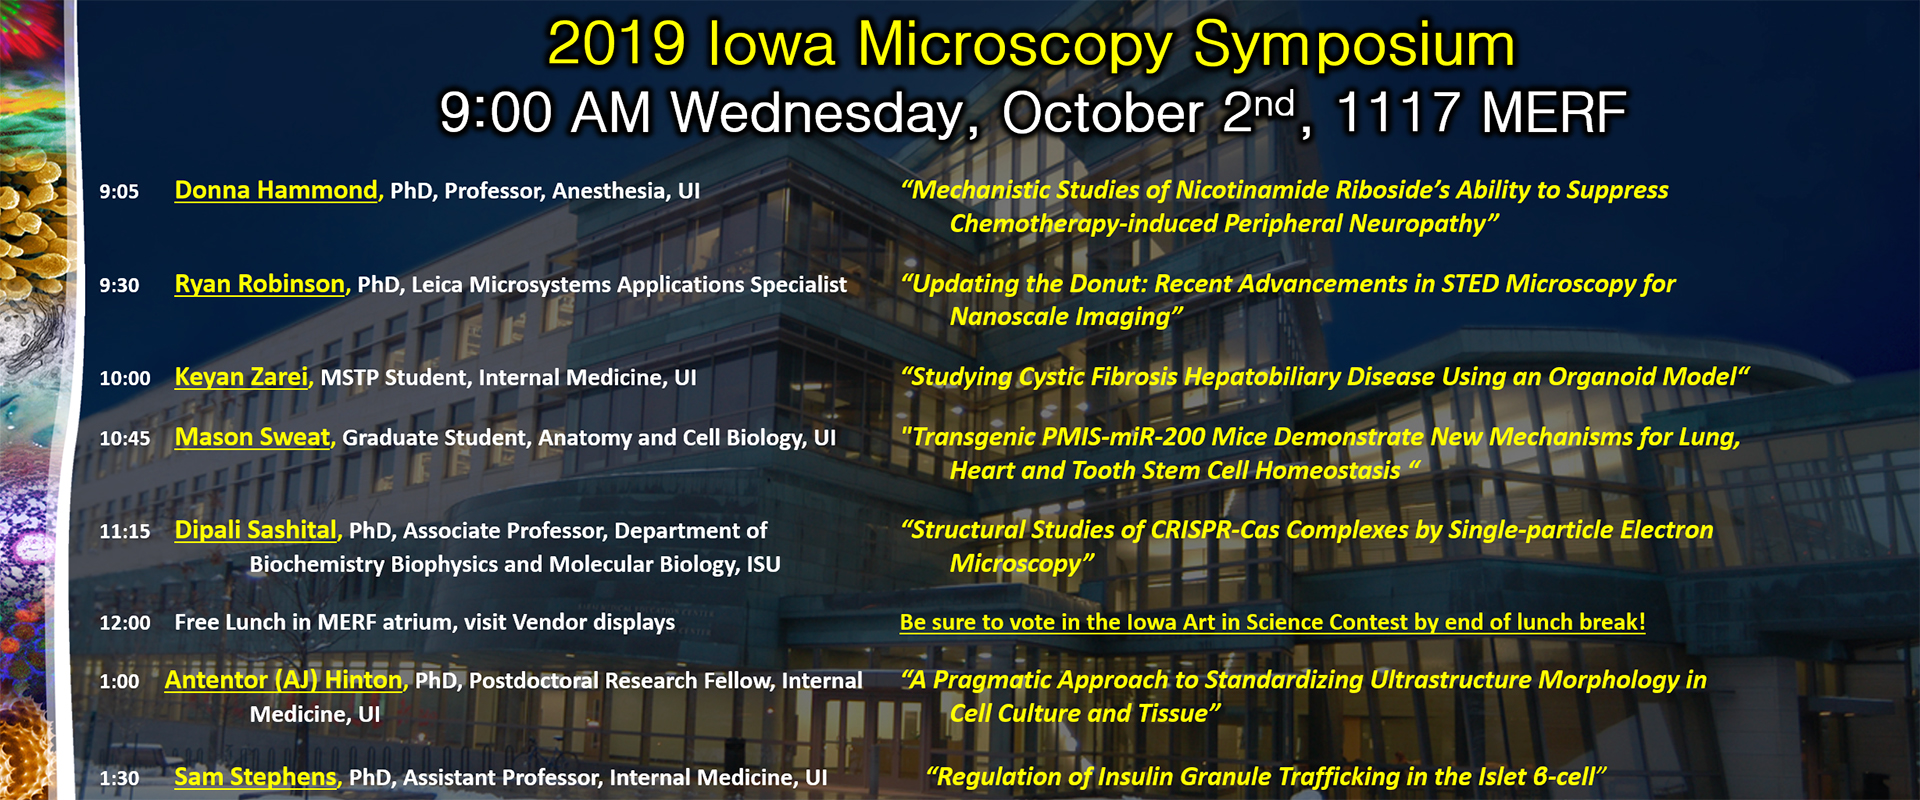 Iowa Microscopy Symposium